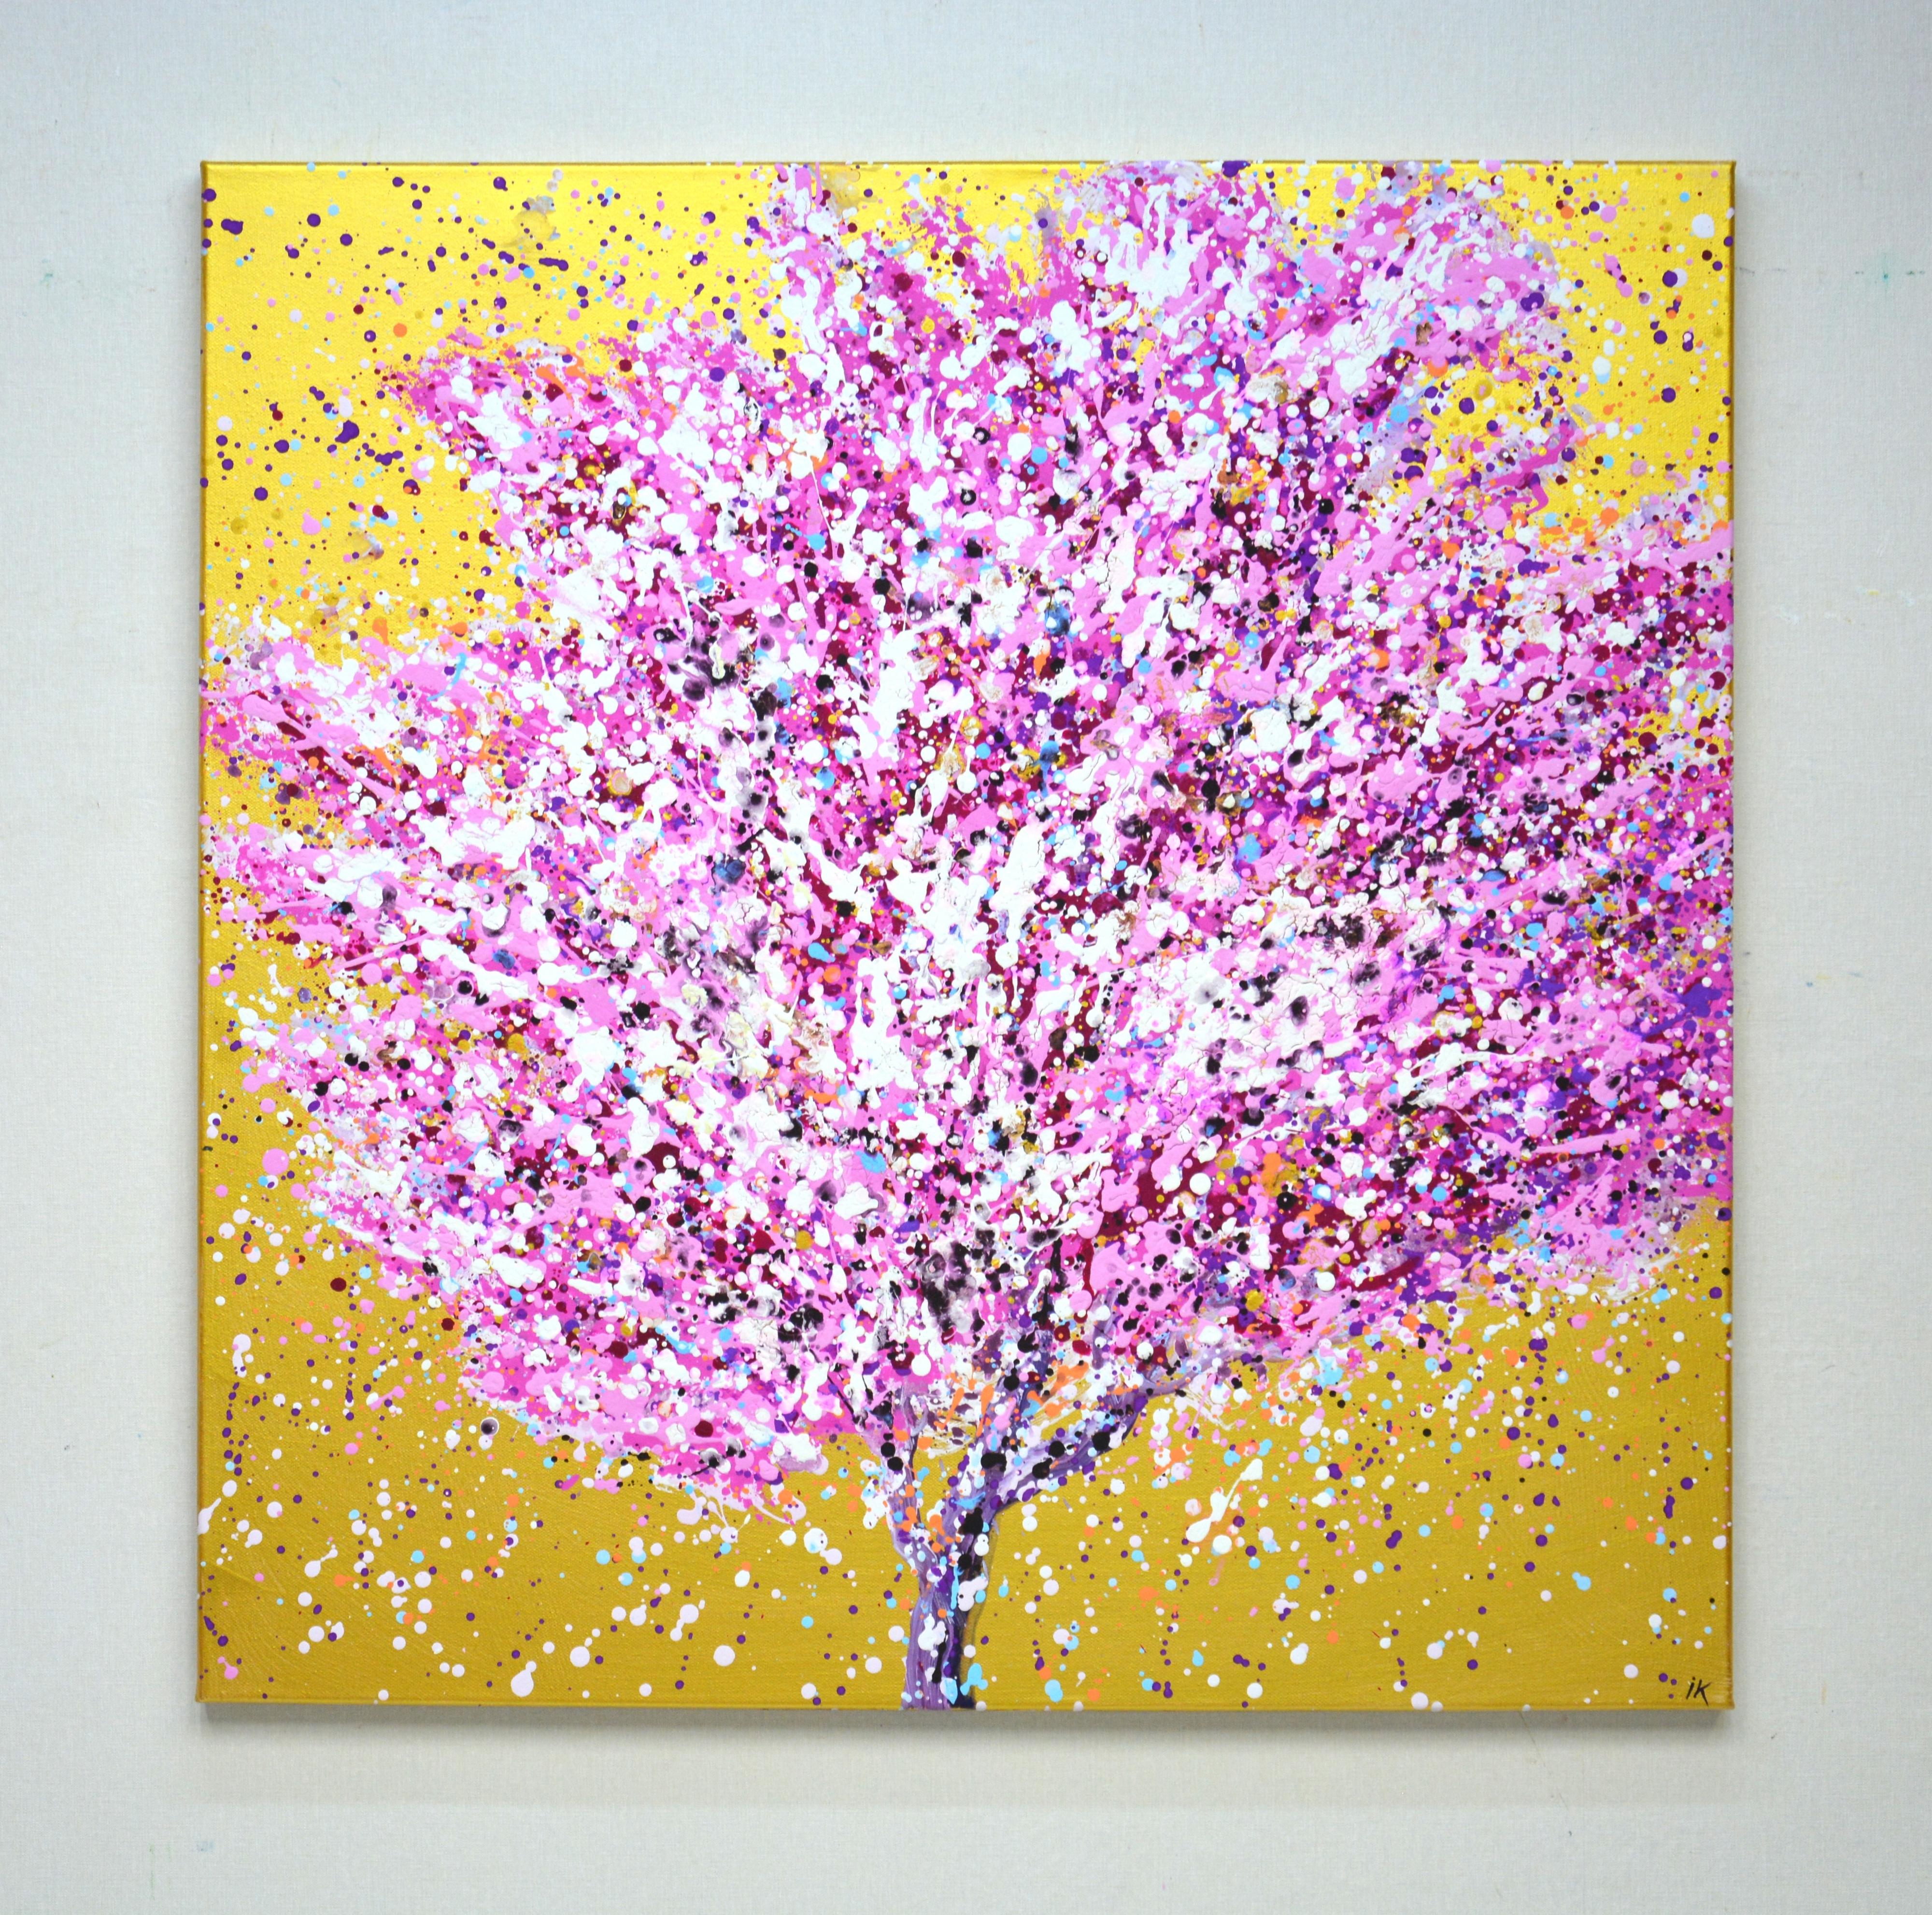 		Sakura cherry blossoms 2. - Painting by Iryna Kastsova